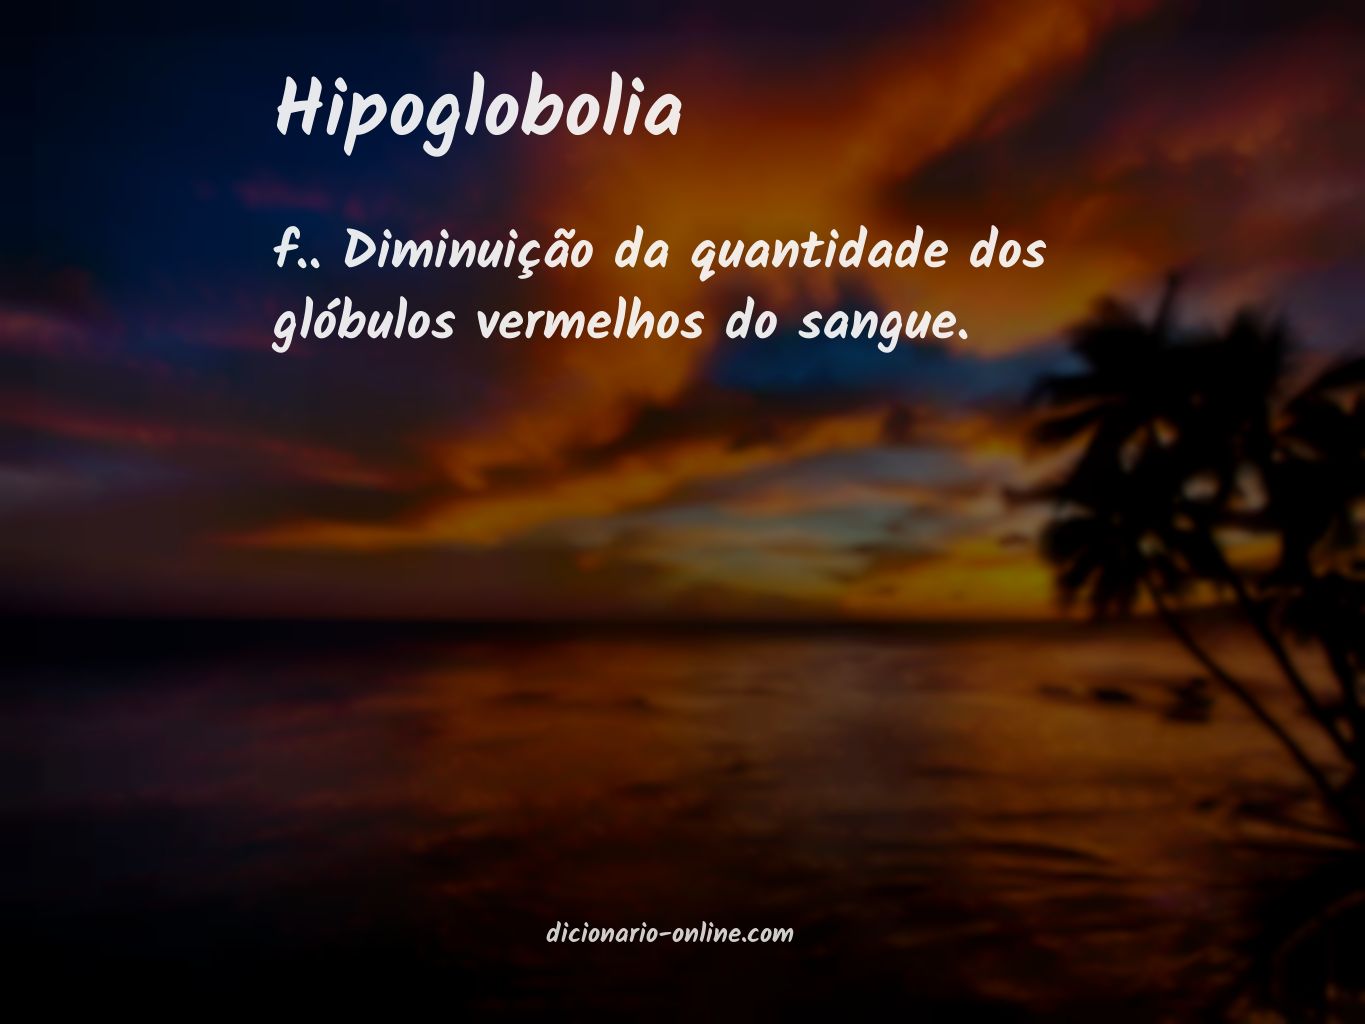 Significado de hipoglobolia